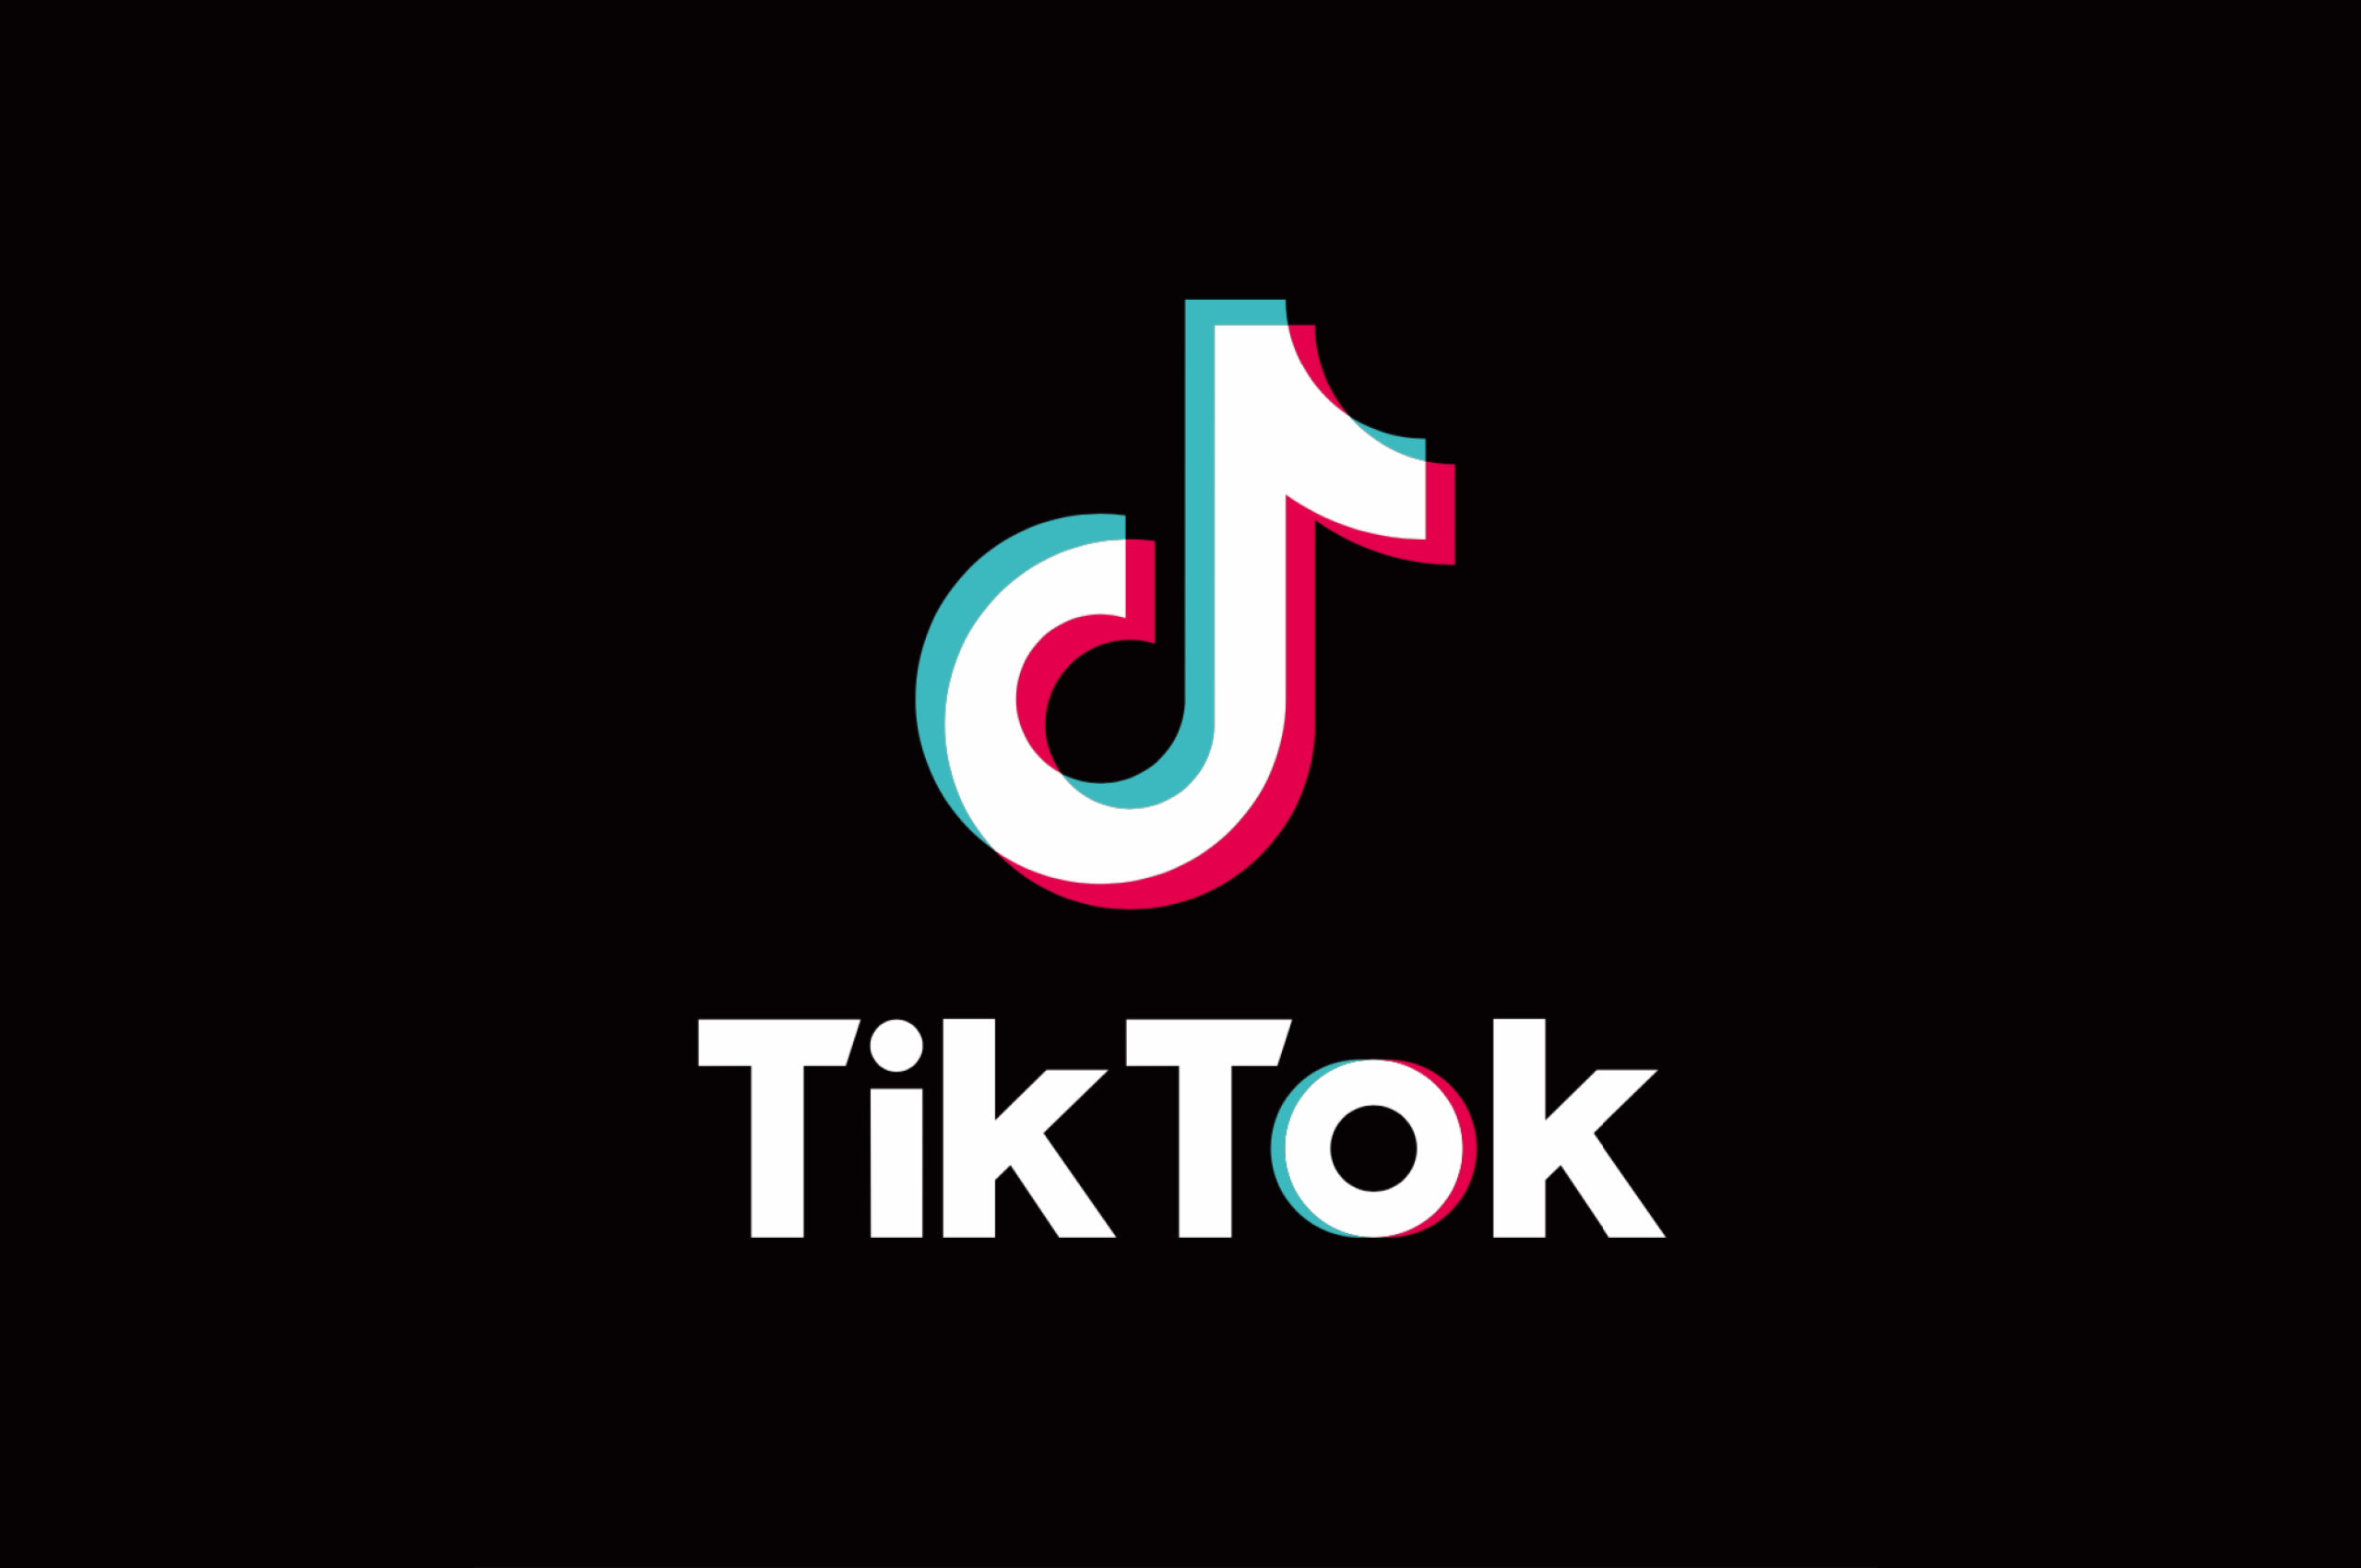 The TikTok logo on a black background - TikTok